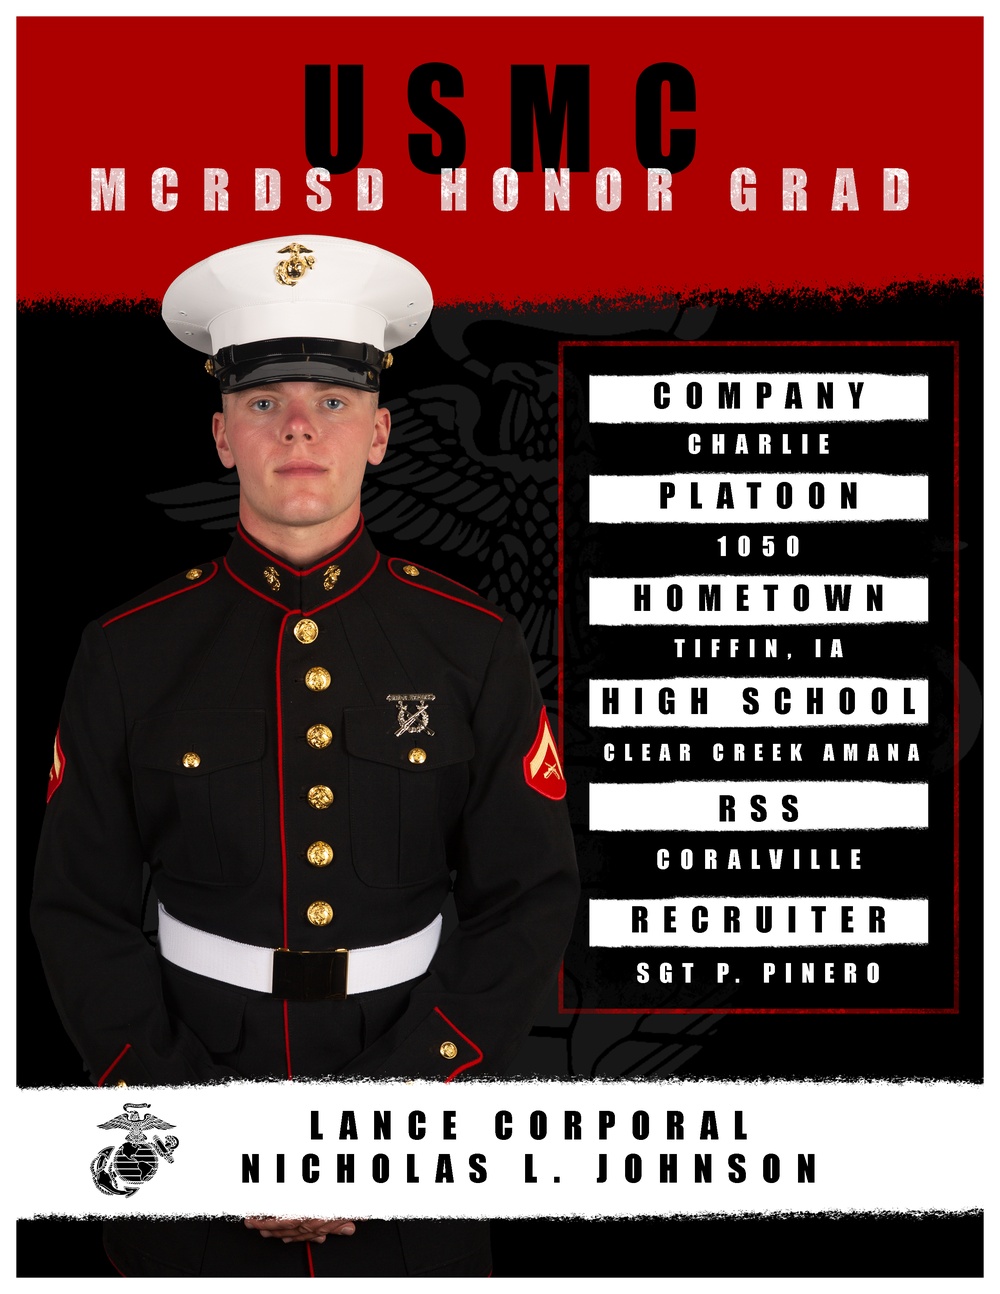 Charlie Company Honor Graduate